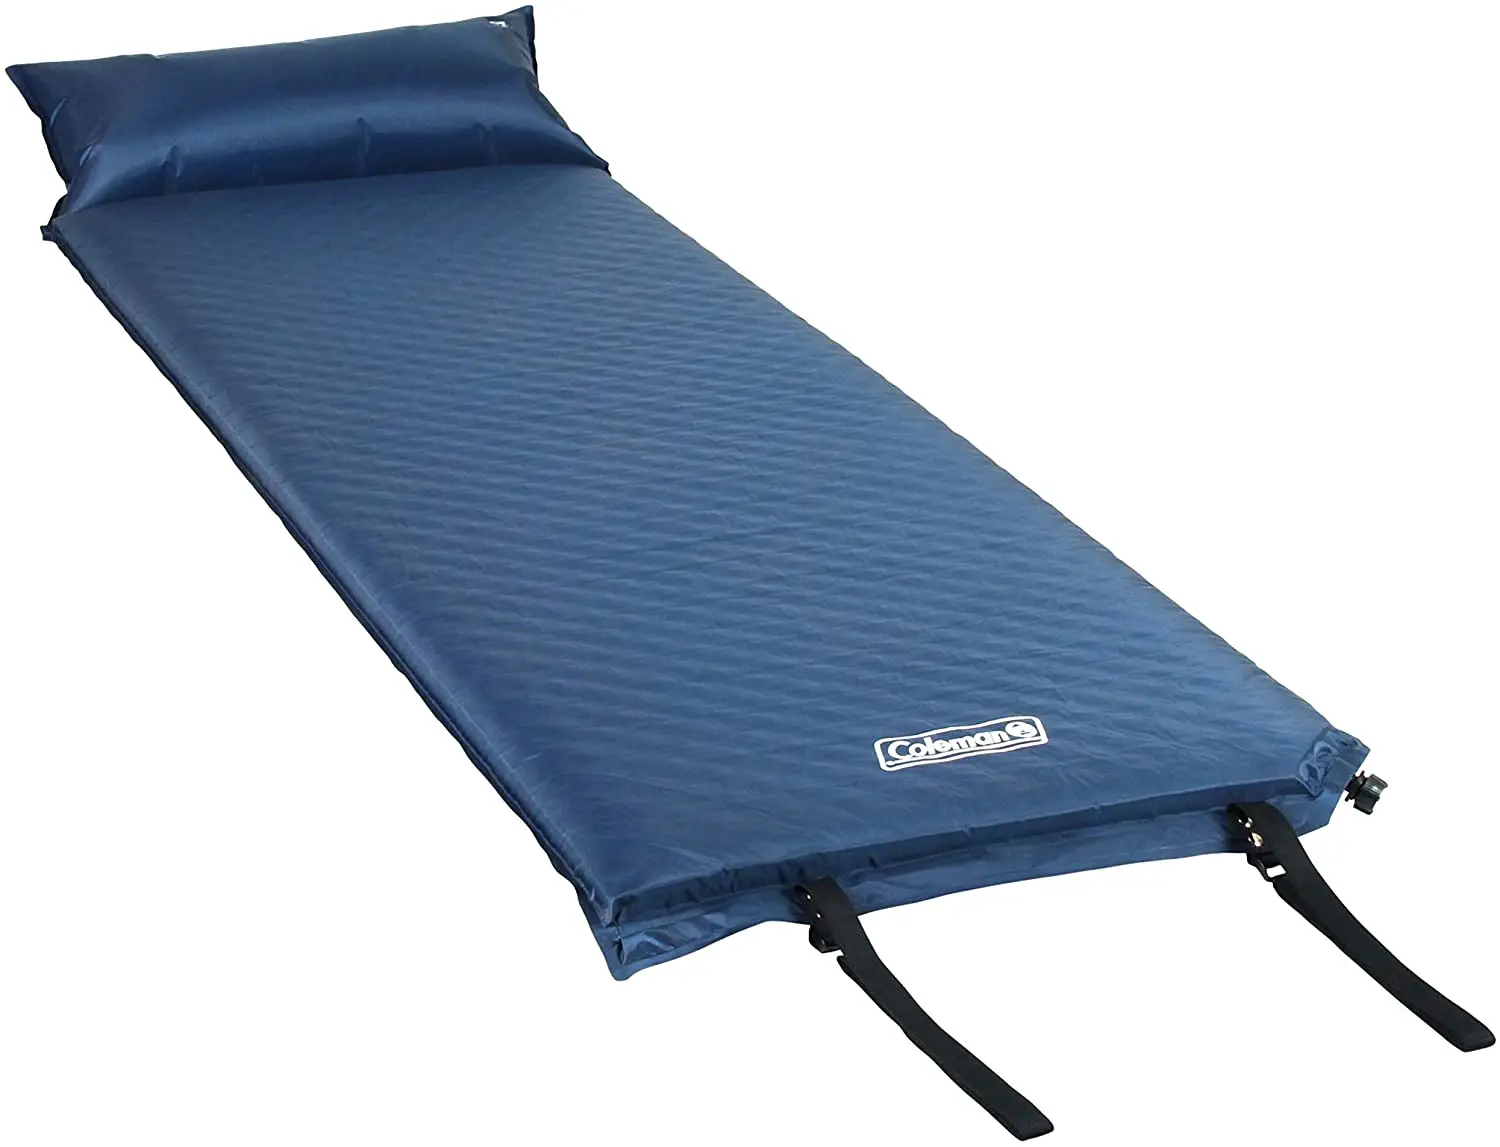 mattress pad for camping